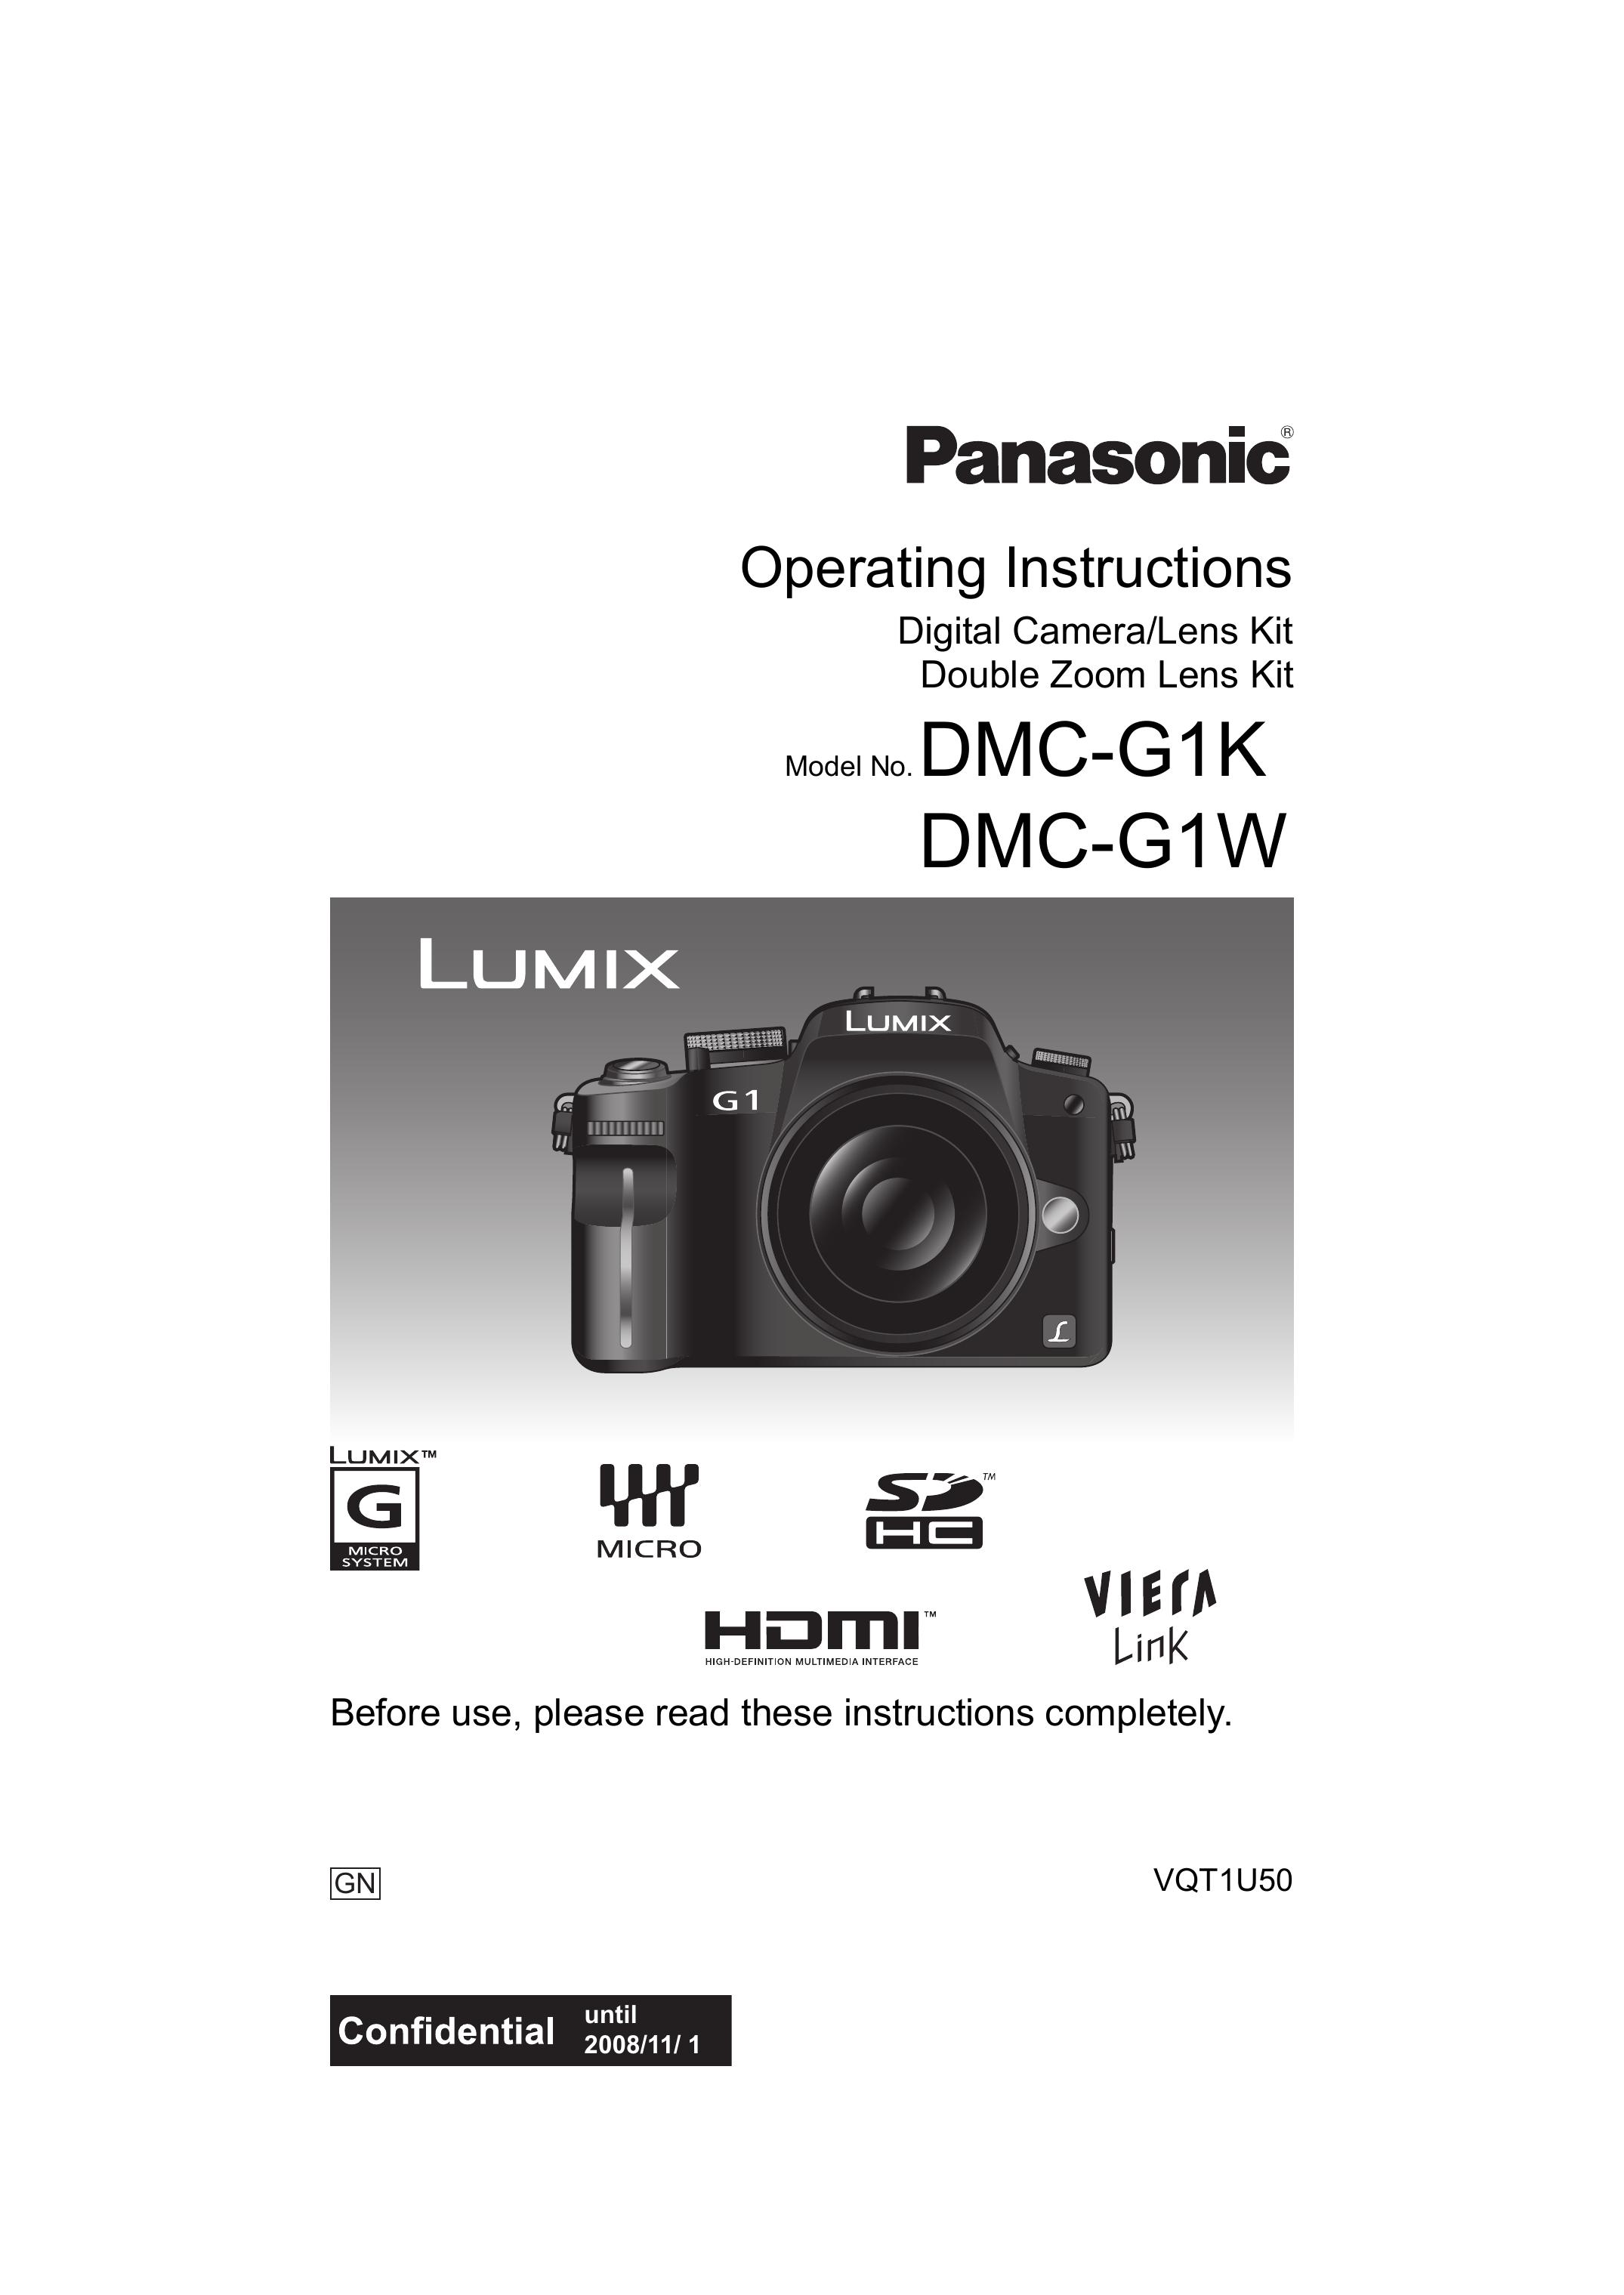 Panasonic DMC-G1W Camera Accessories User Manual